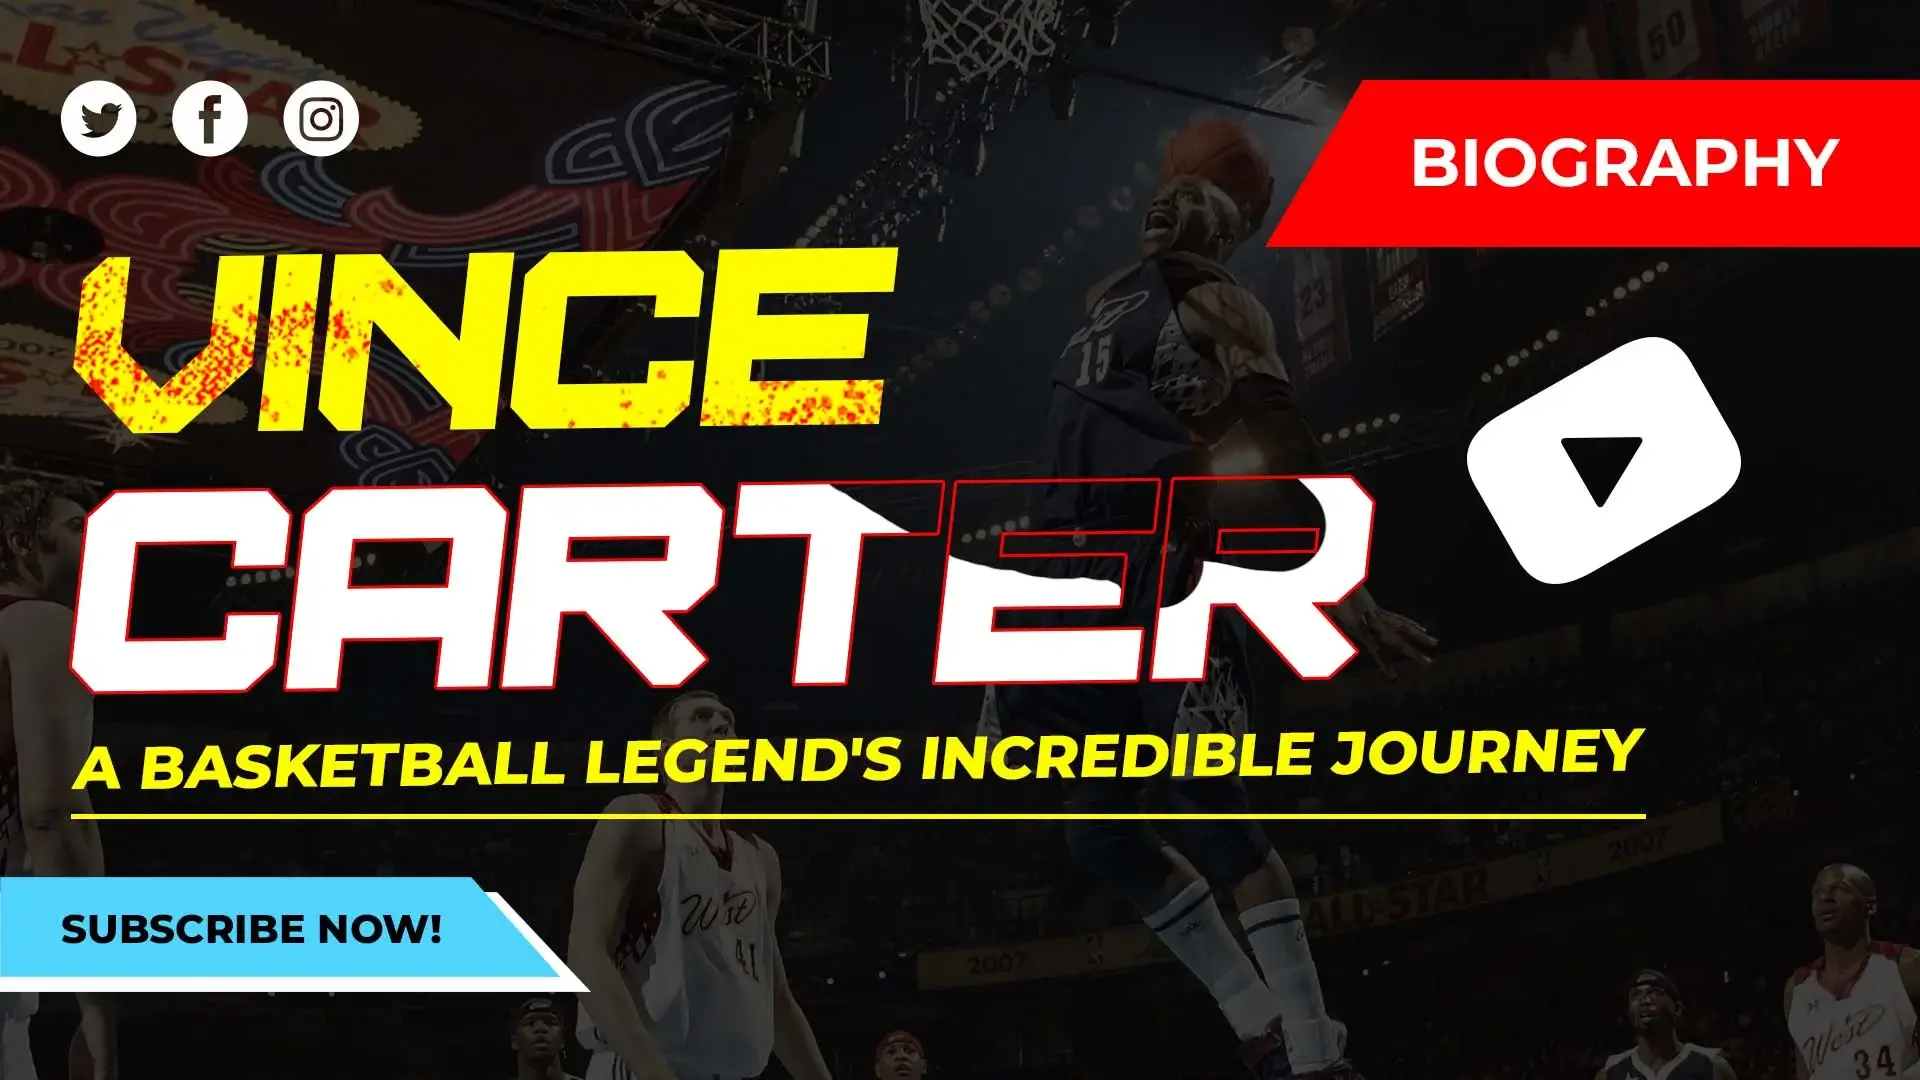 Vince Carter Biography: A Basketball Legend’s Incredible Journey